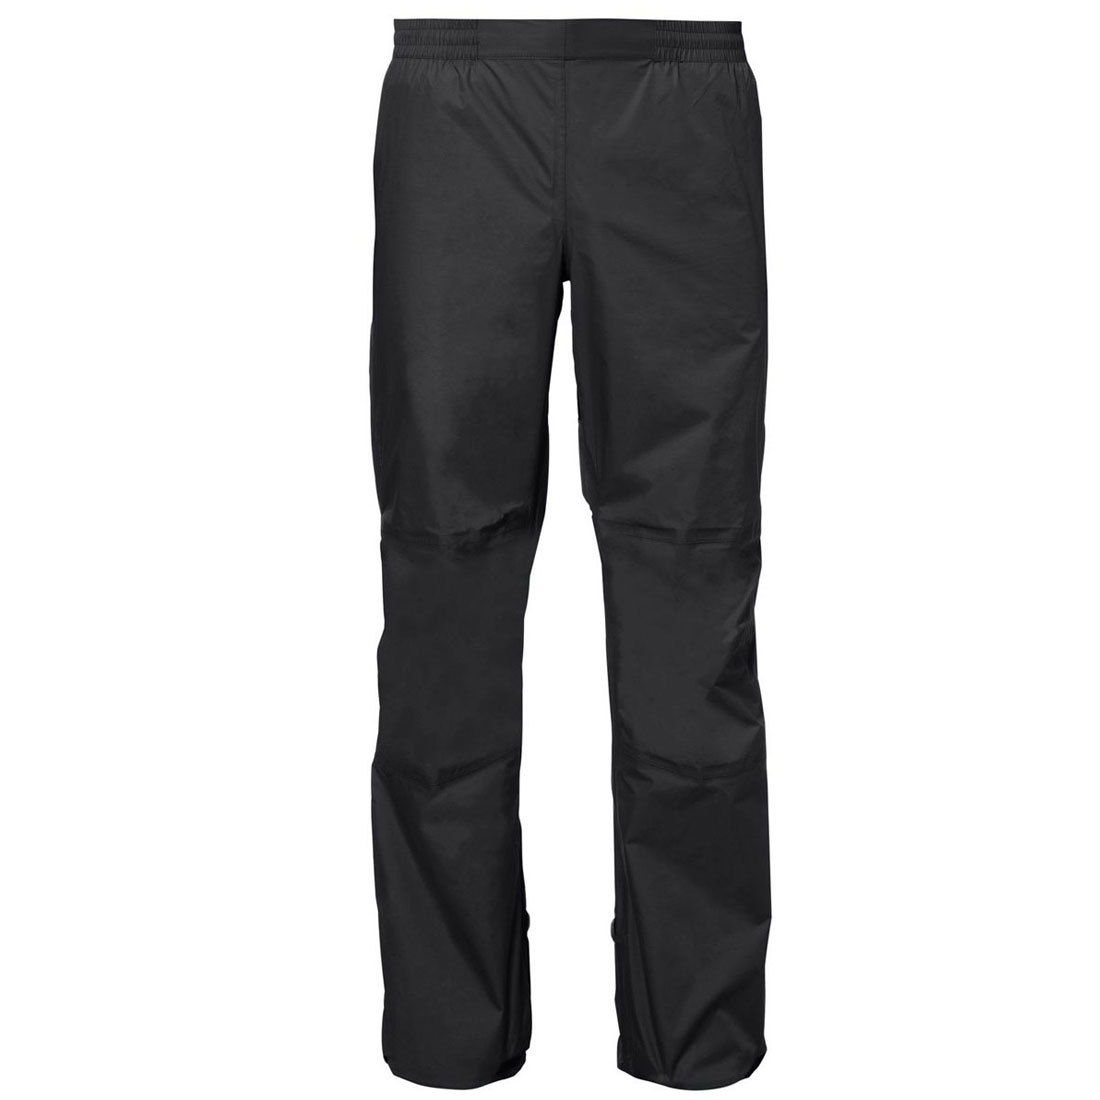 Vaude Pantalones Impermeables Mujer - Fluid - Regular - negro